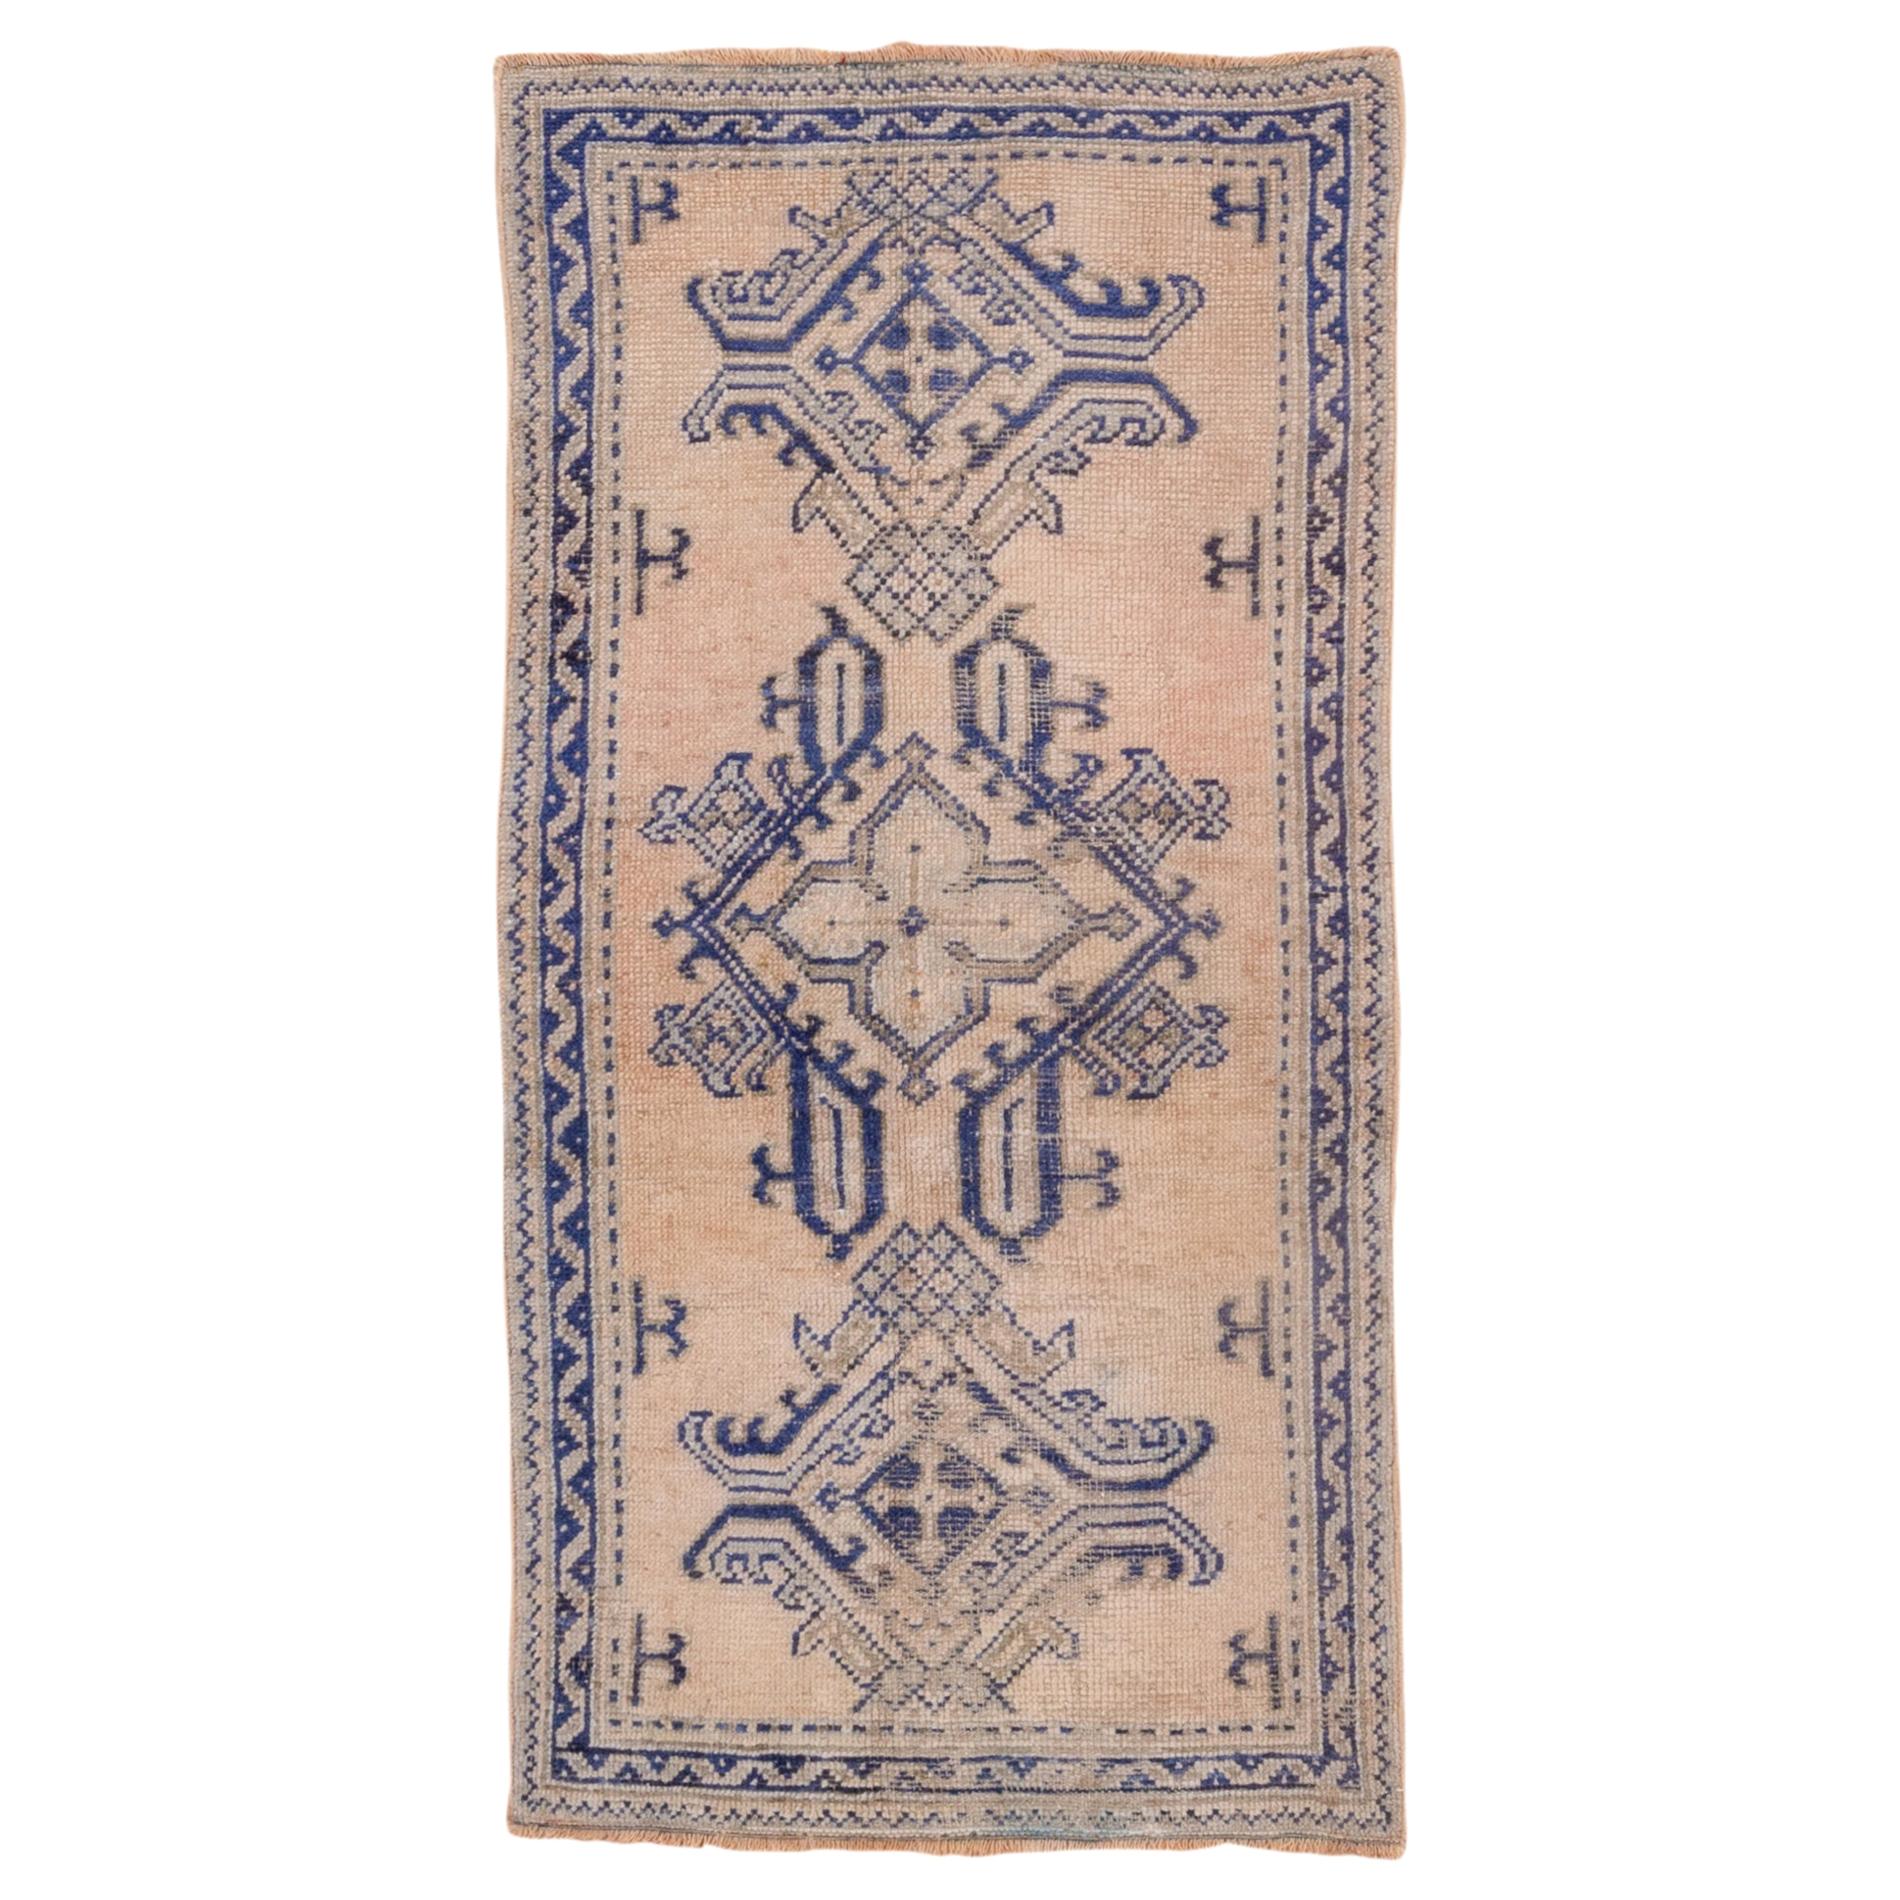 Antique Oushak Rug, Royal Blue Accents For Sale